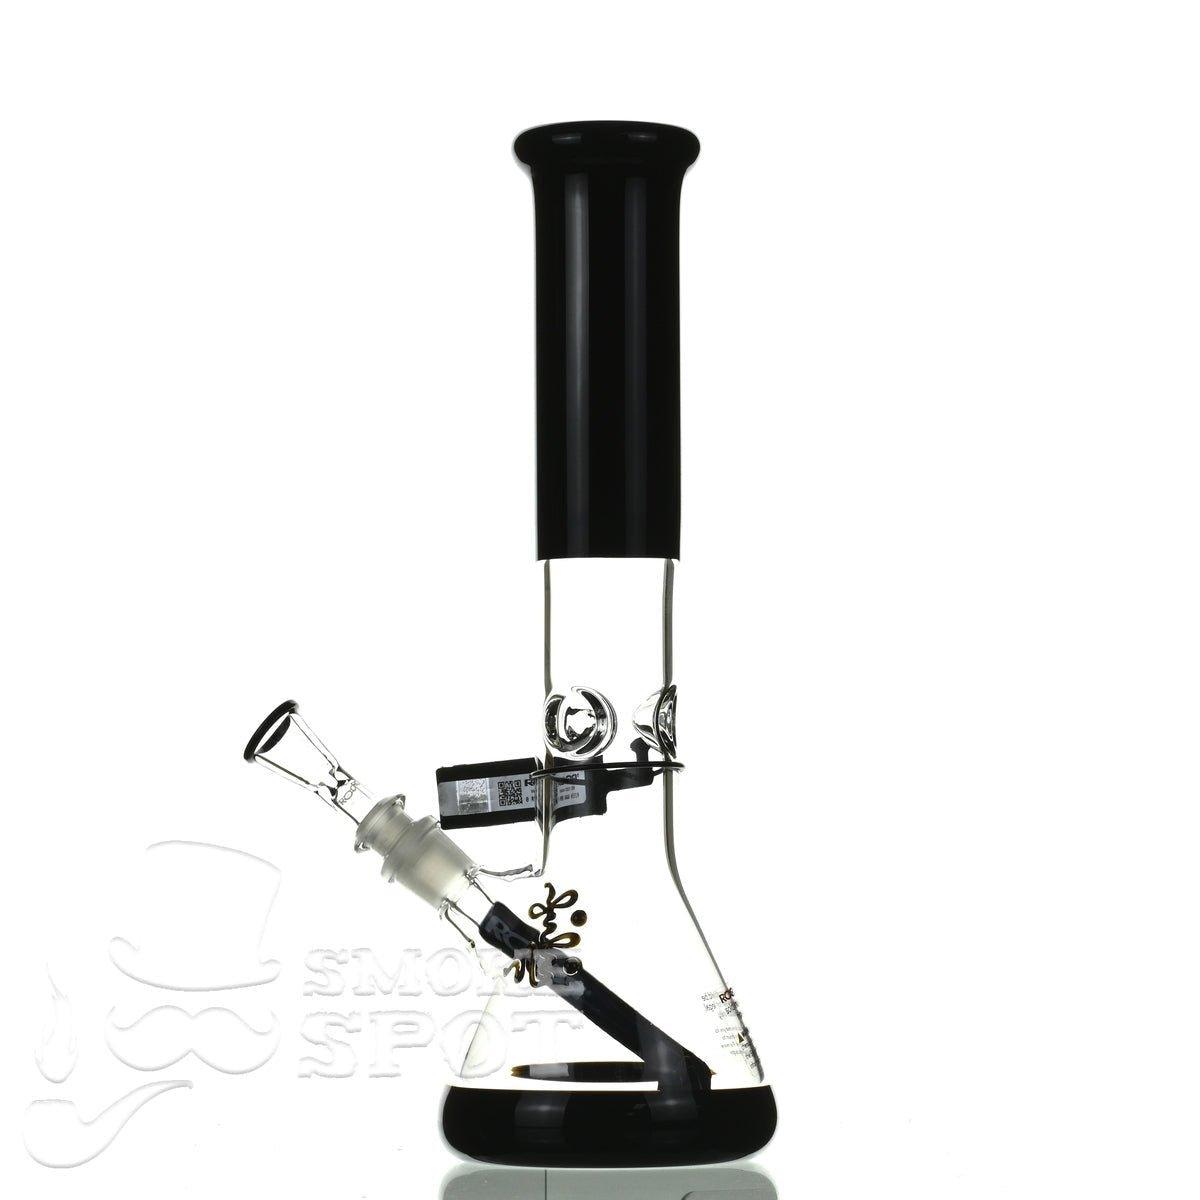 ROOR tech glass beaker 14 inch 50x5 black - Smoke Spot Smoke Shop